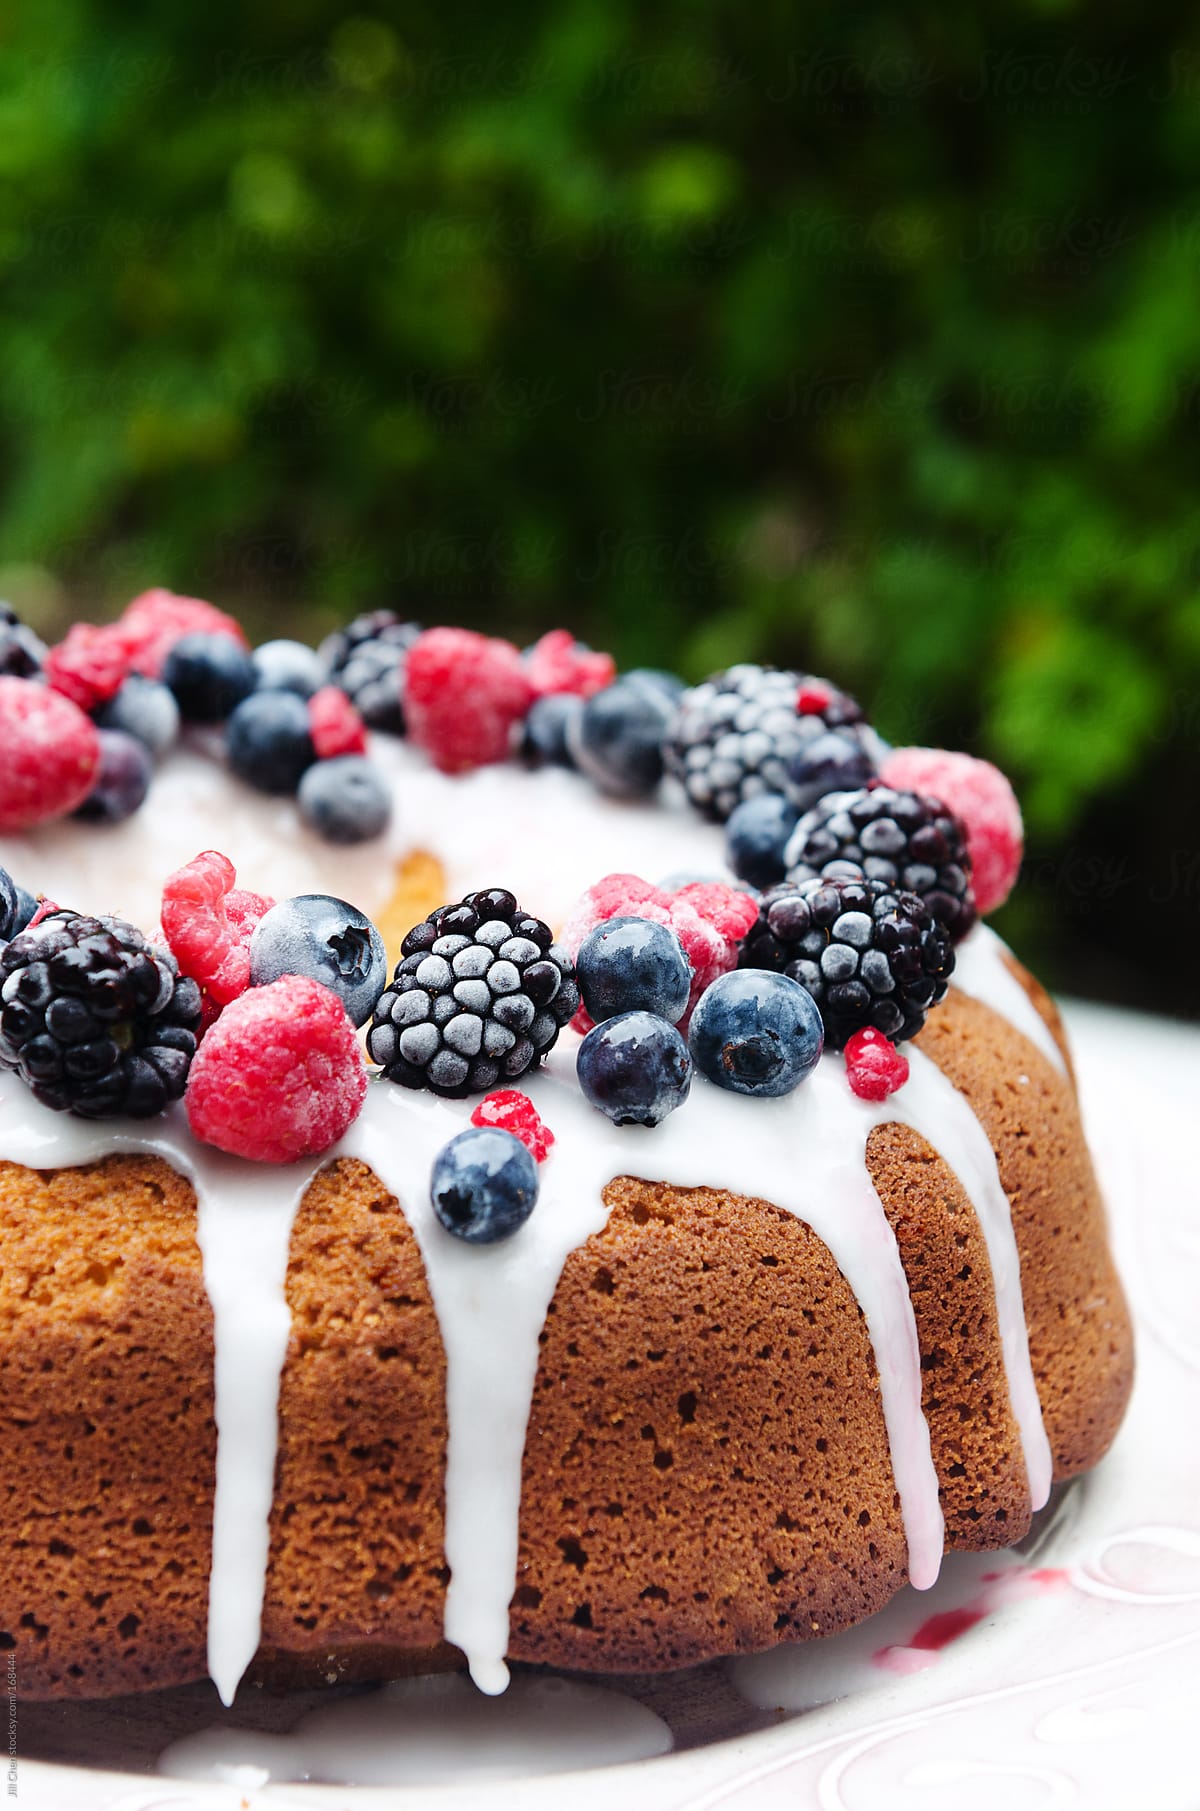 Gourmet dessert cake with berries